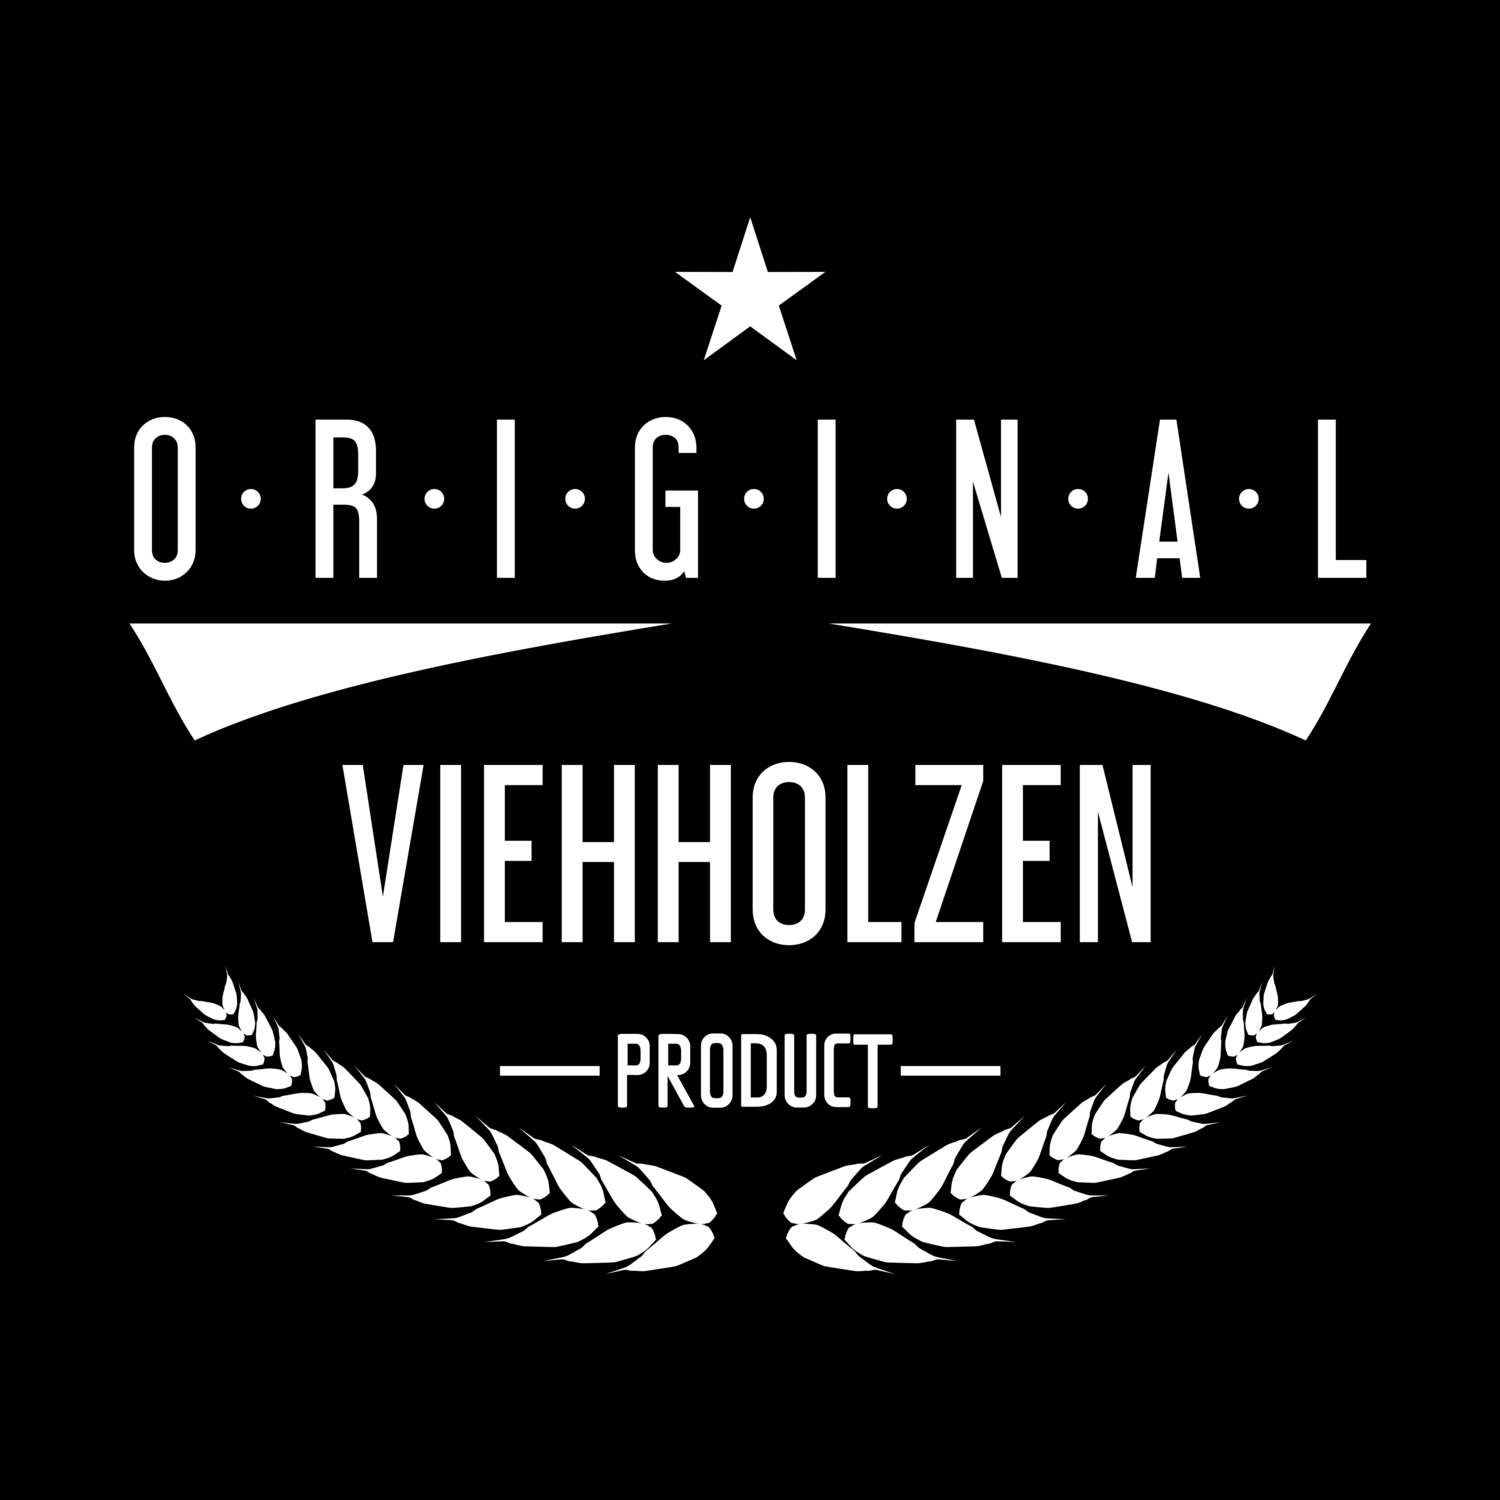 Viehholzen T-Shirt »Original Product«